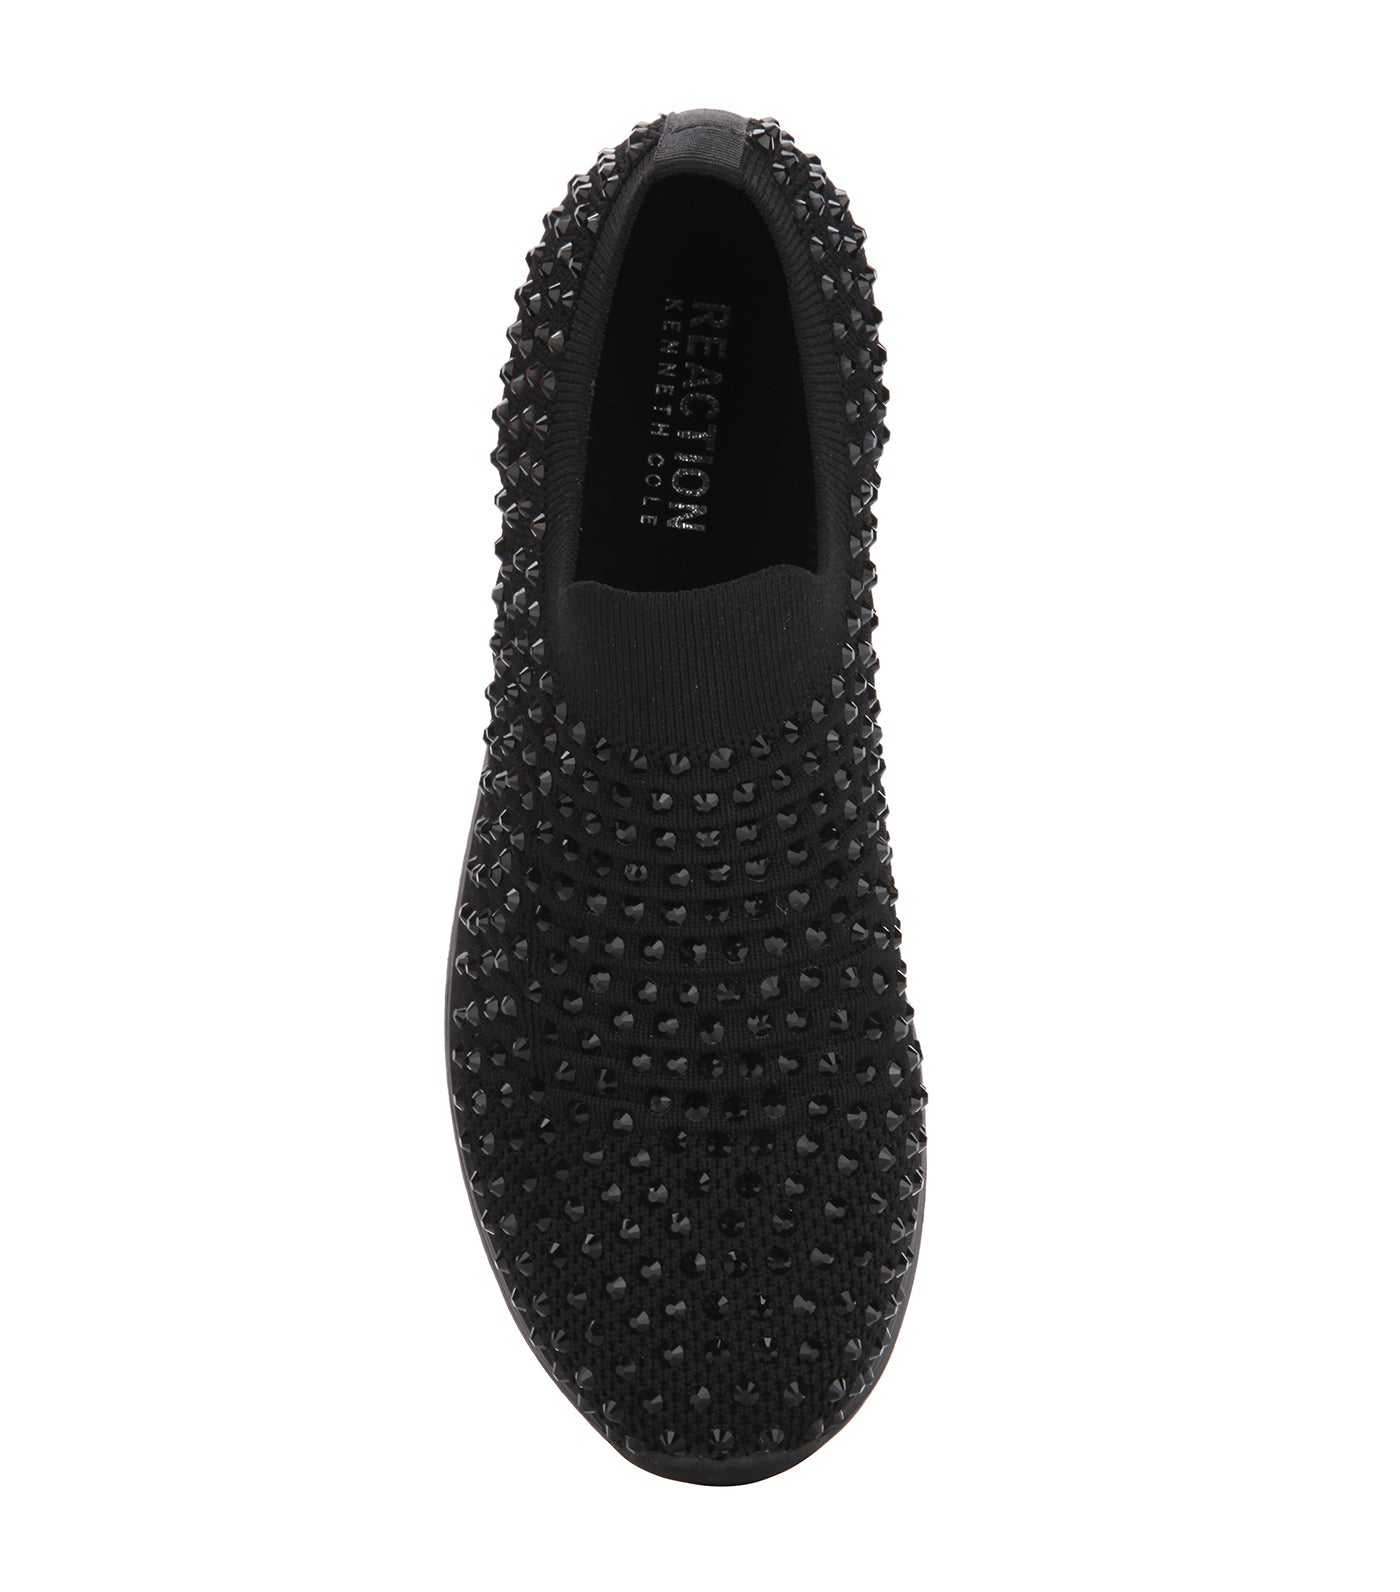 Cameron Jewel Jogger Slip-On Sneaker Black